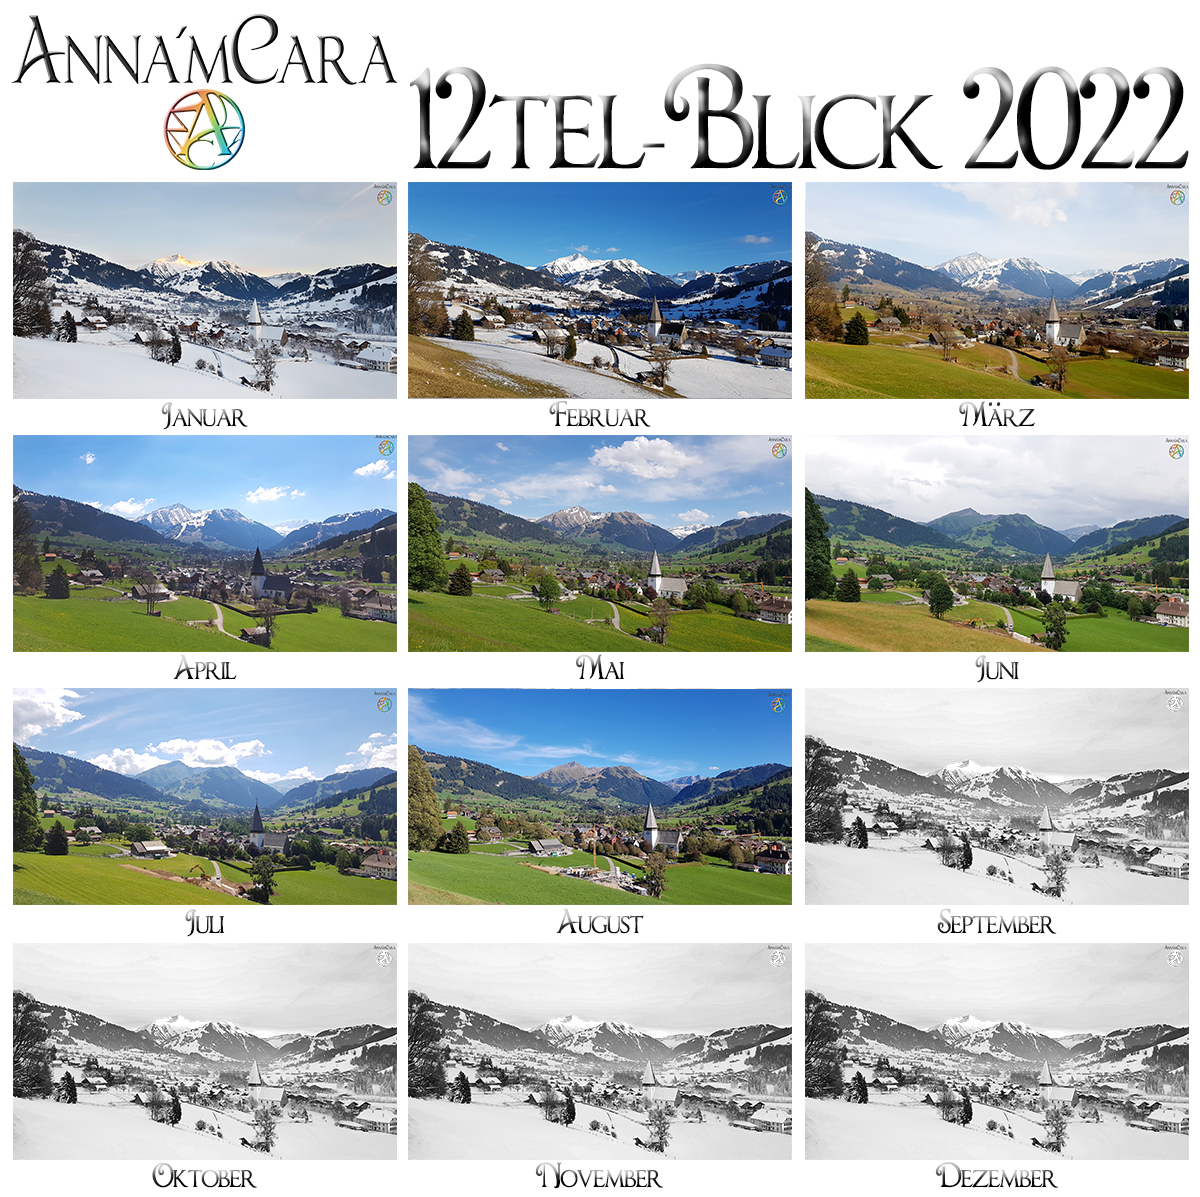 Anna'mCara-Blog - 12tel-Blick - Jahresblick - Gstaad - August